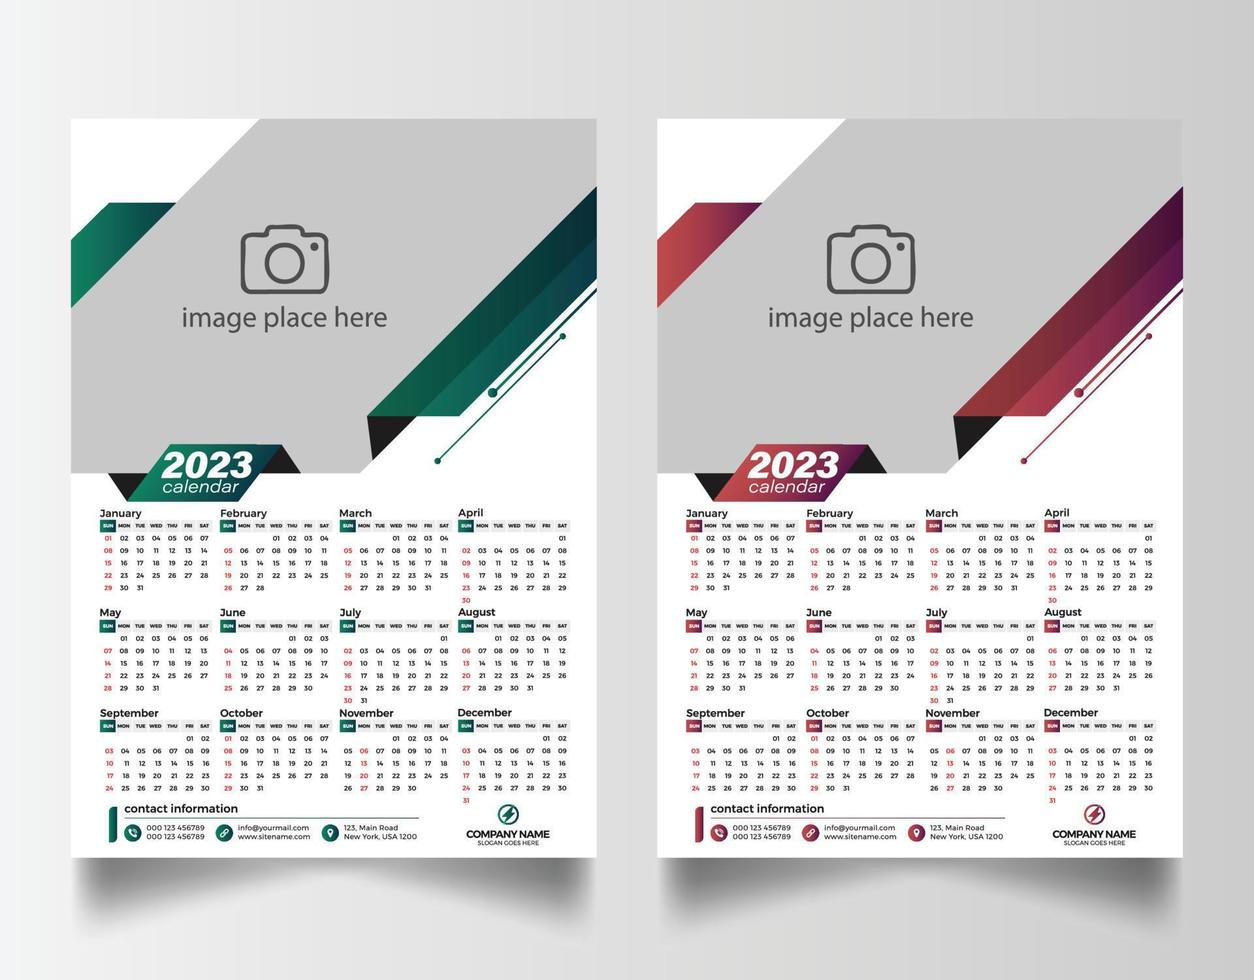 2023 wall calendar design template vector